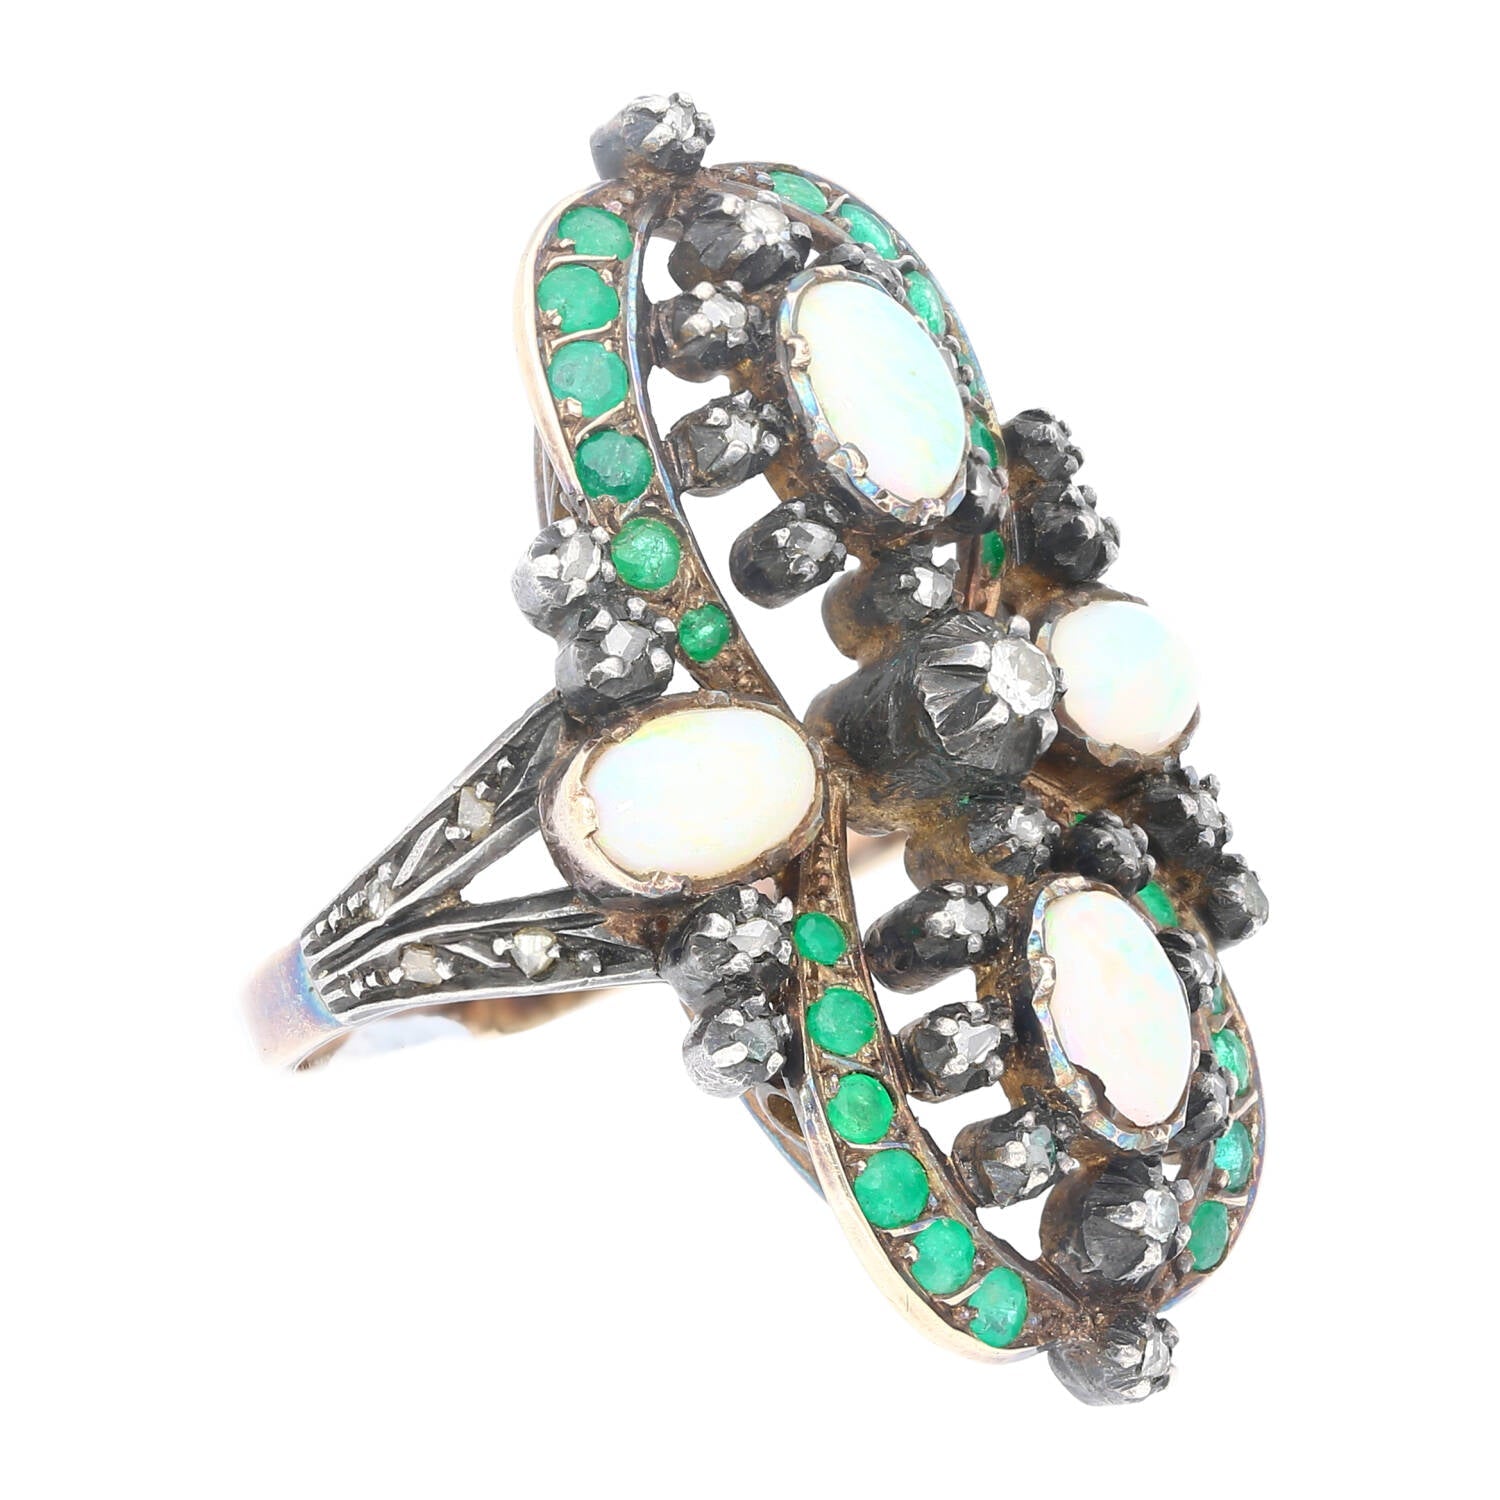 Antique-Victorian-Era-1800s-Opal-Emerald-and-Diamond-Ring-in-Gold-and-Silver-Rings-2_ac8e5ad4-45e7-40d1-b65f-550dc6543ab7.jpg